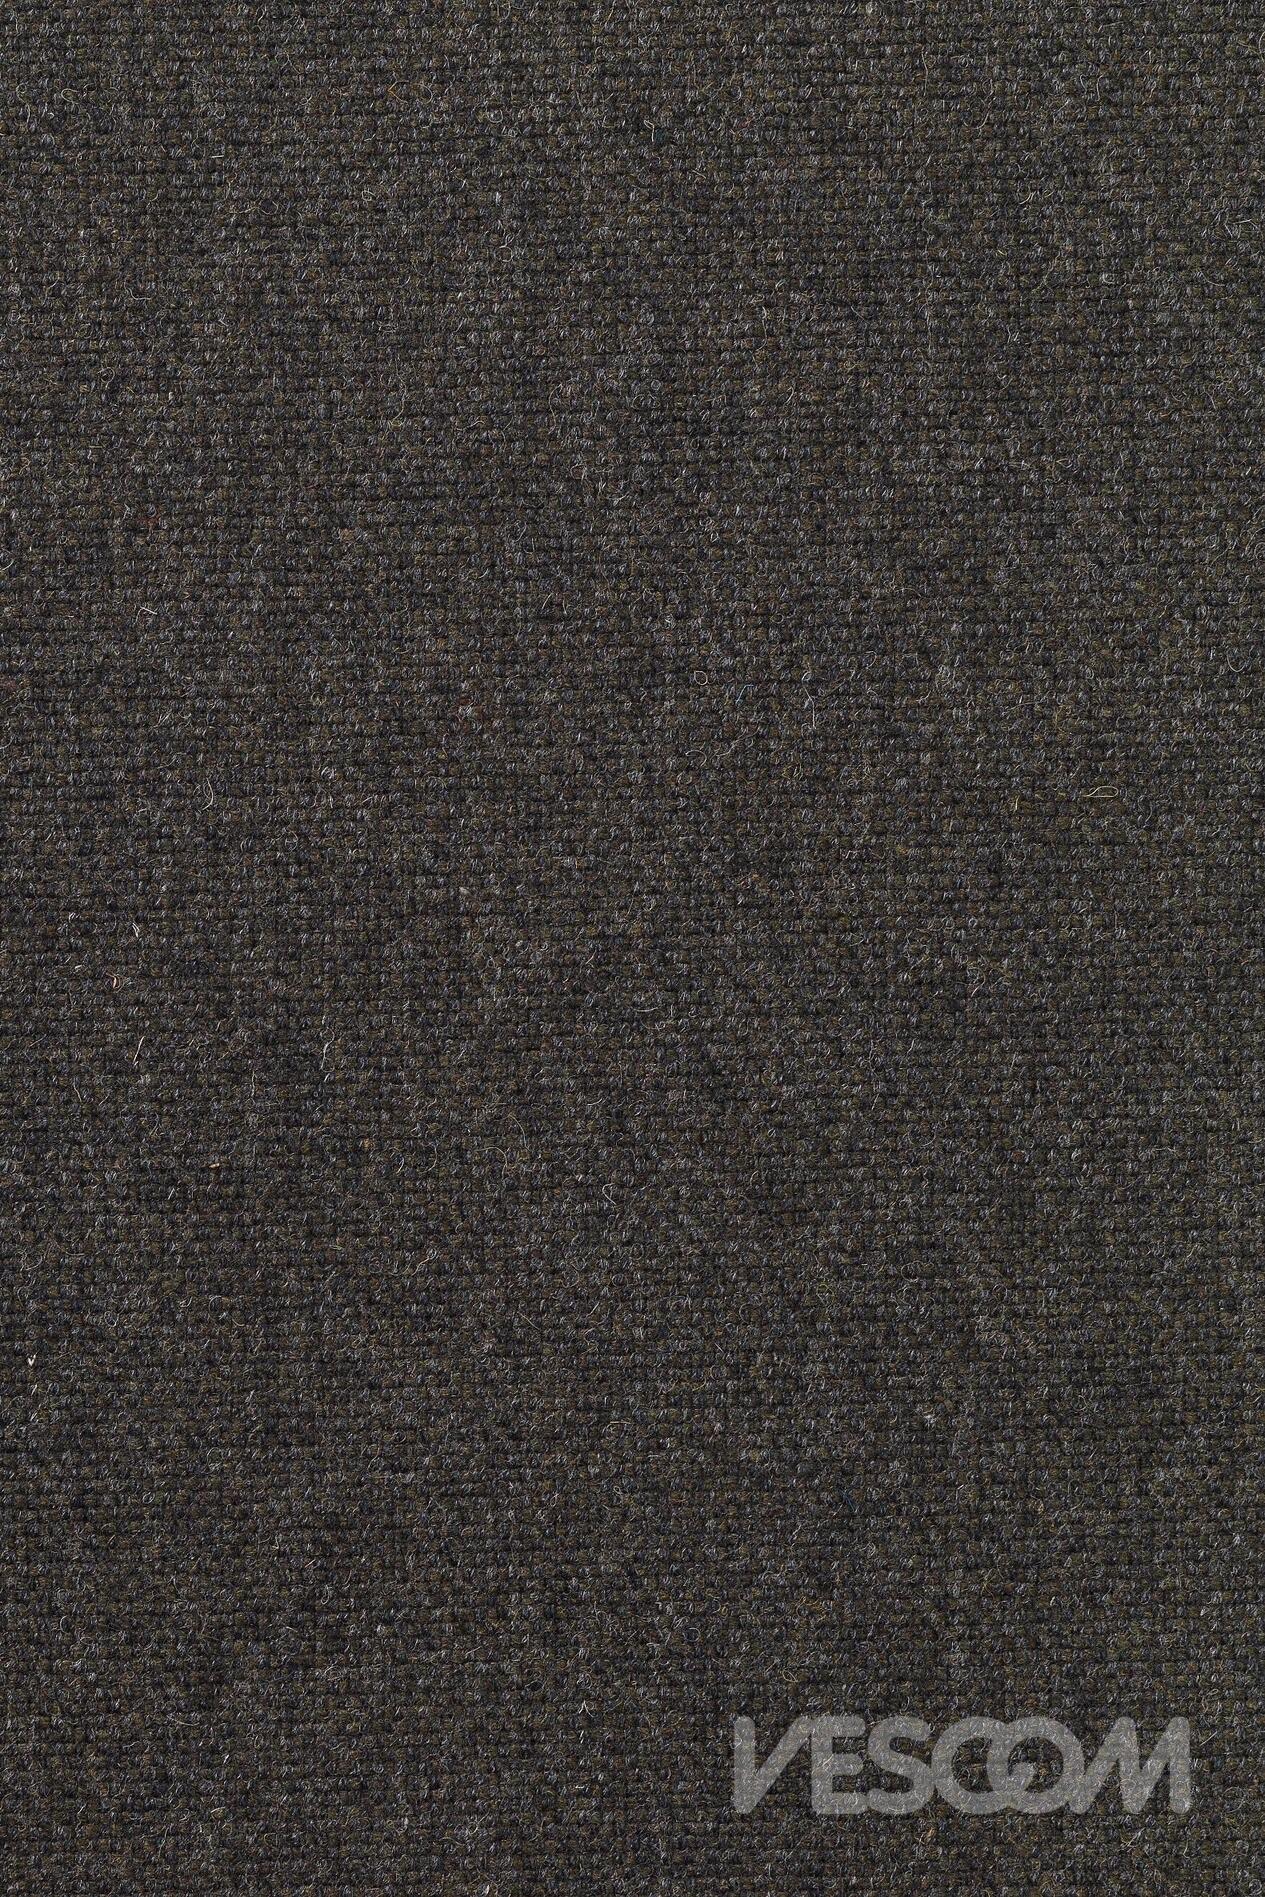 Vescom-Wolin-Upholstery-Fabric-7050.41.jpg